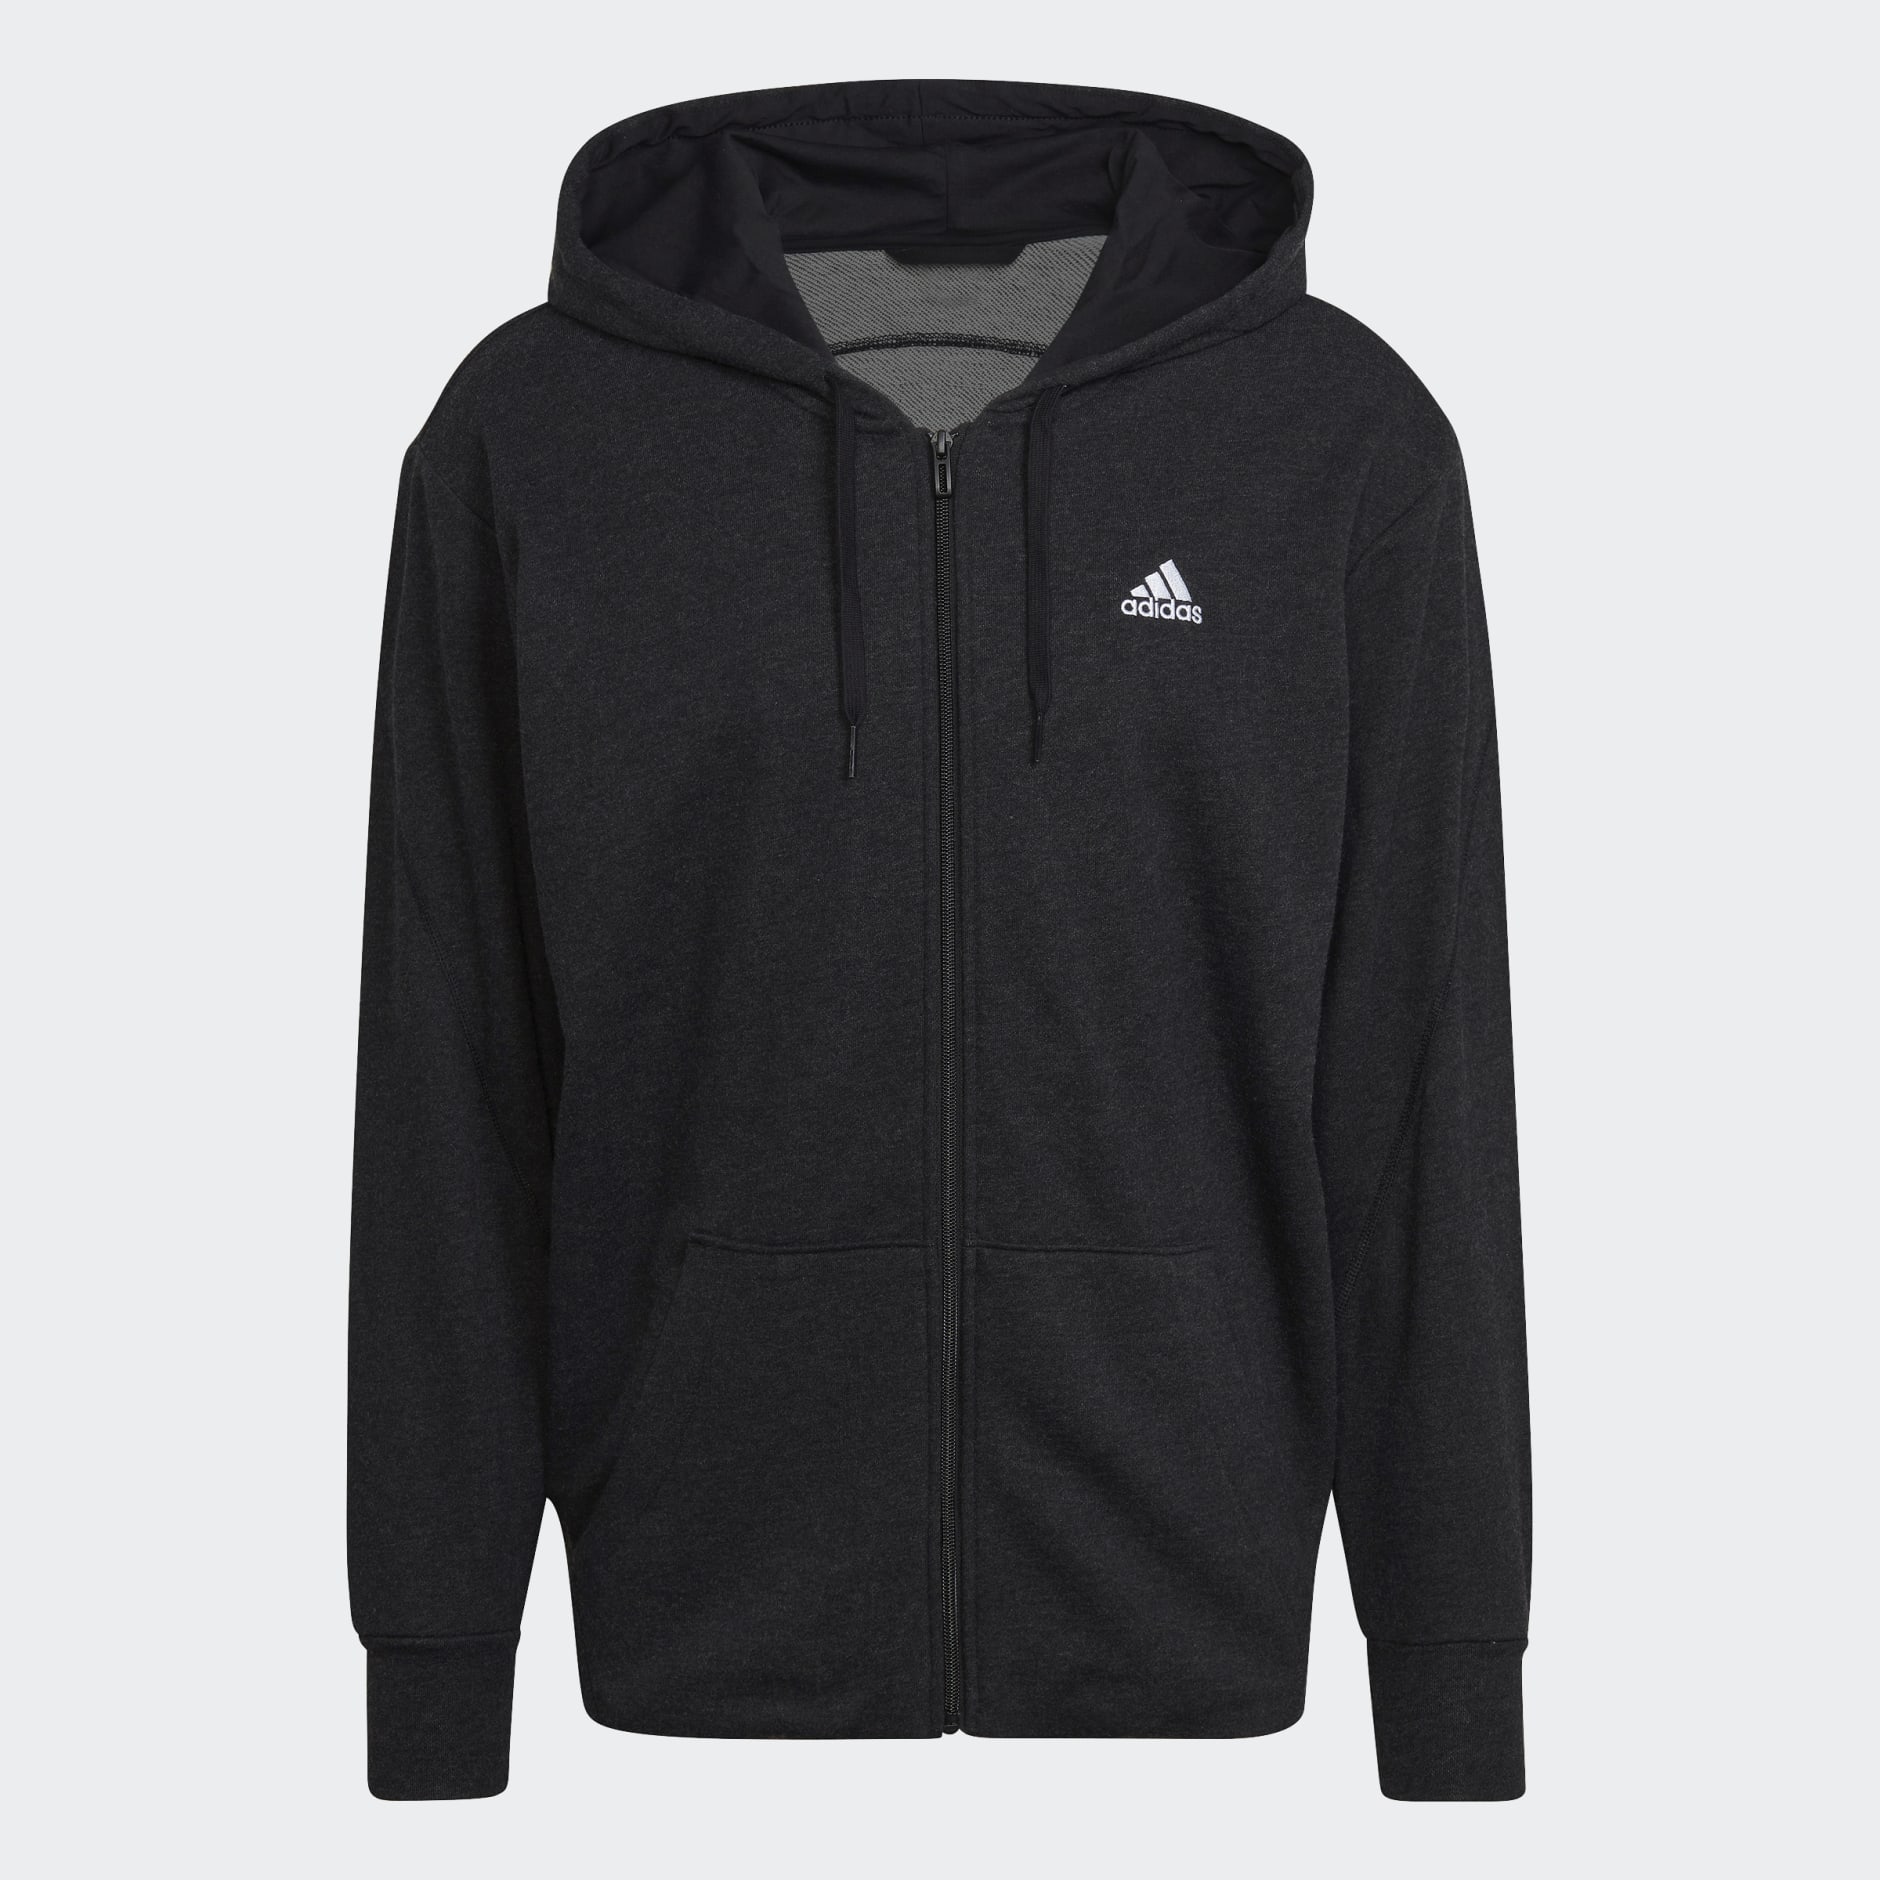 Men's Clothing - Mélange Full-Zip Hooded Sweatshirt - Black | adidas ...